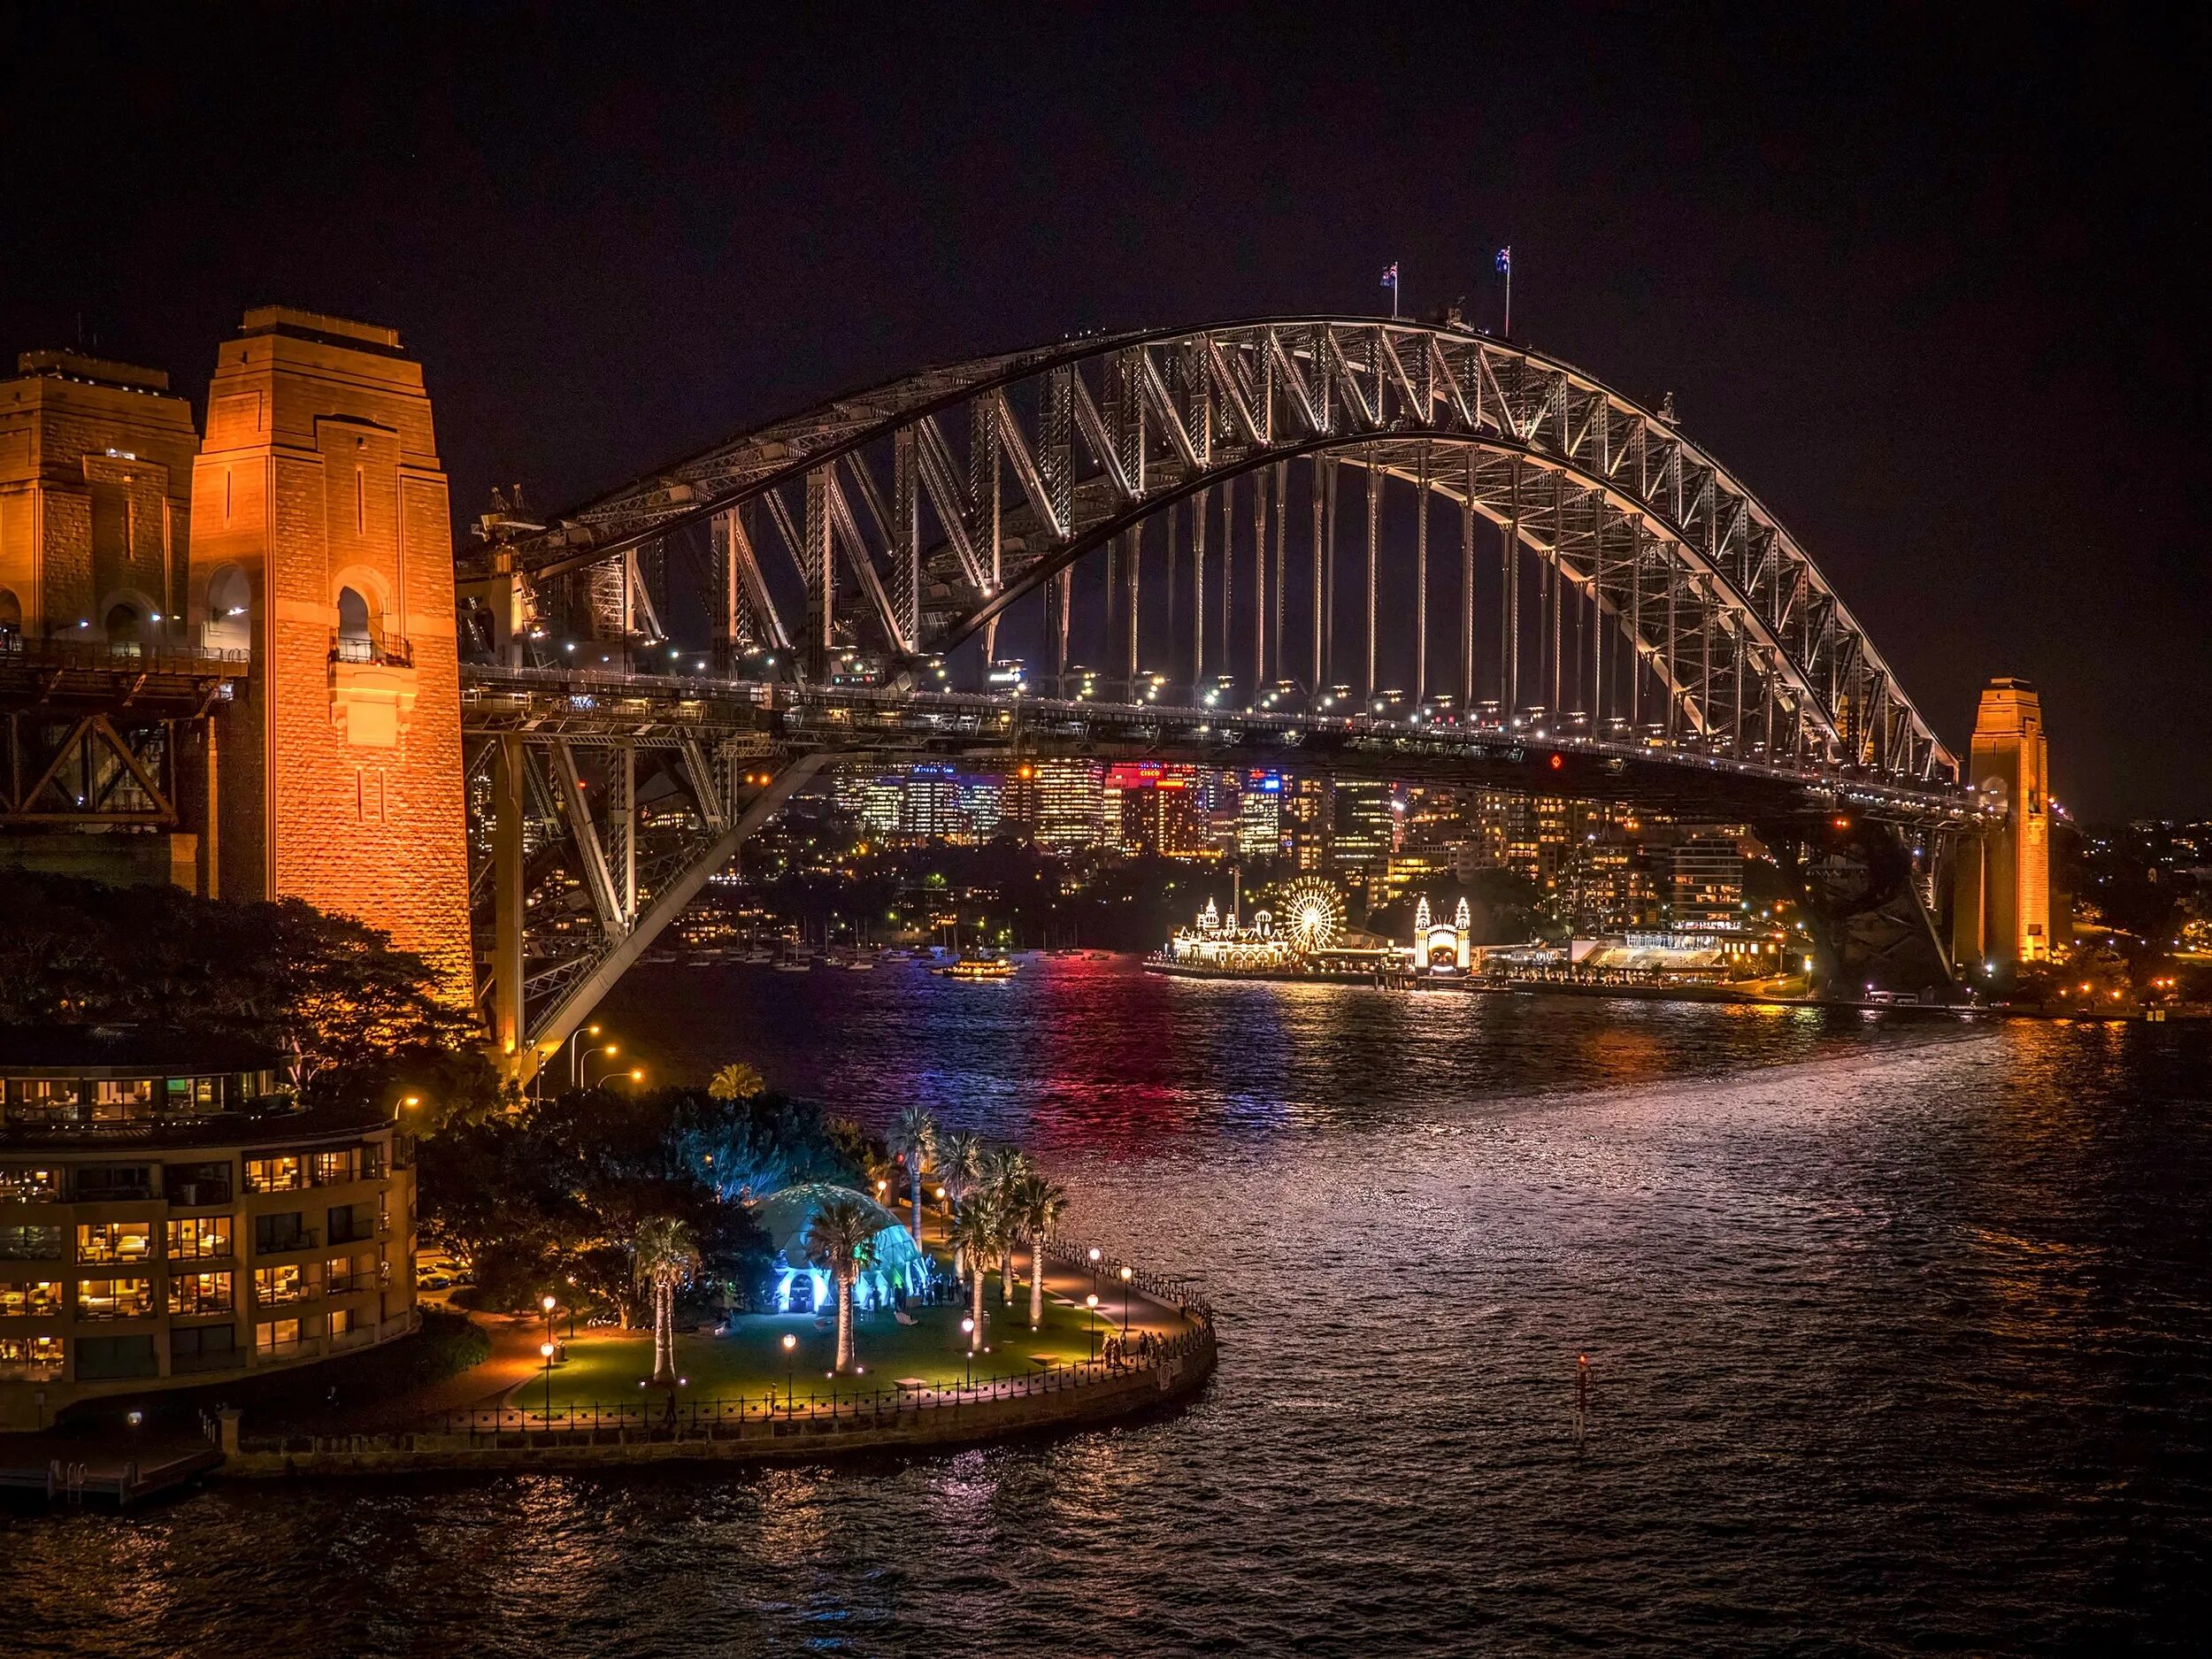 Harbour bridge. Харбор-бридж Сидней. Сиднейский Харбор-бридж, Австралия. Мост Харбор бридж в Австралии. Мост Харбор бридж ночью.